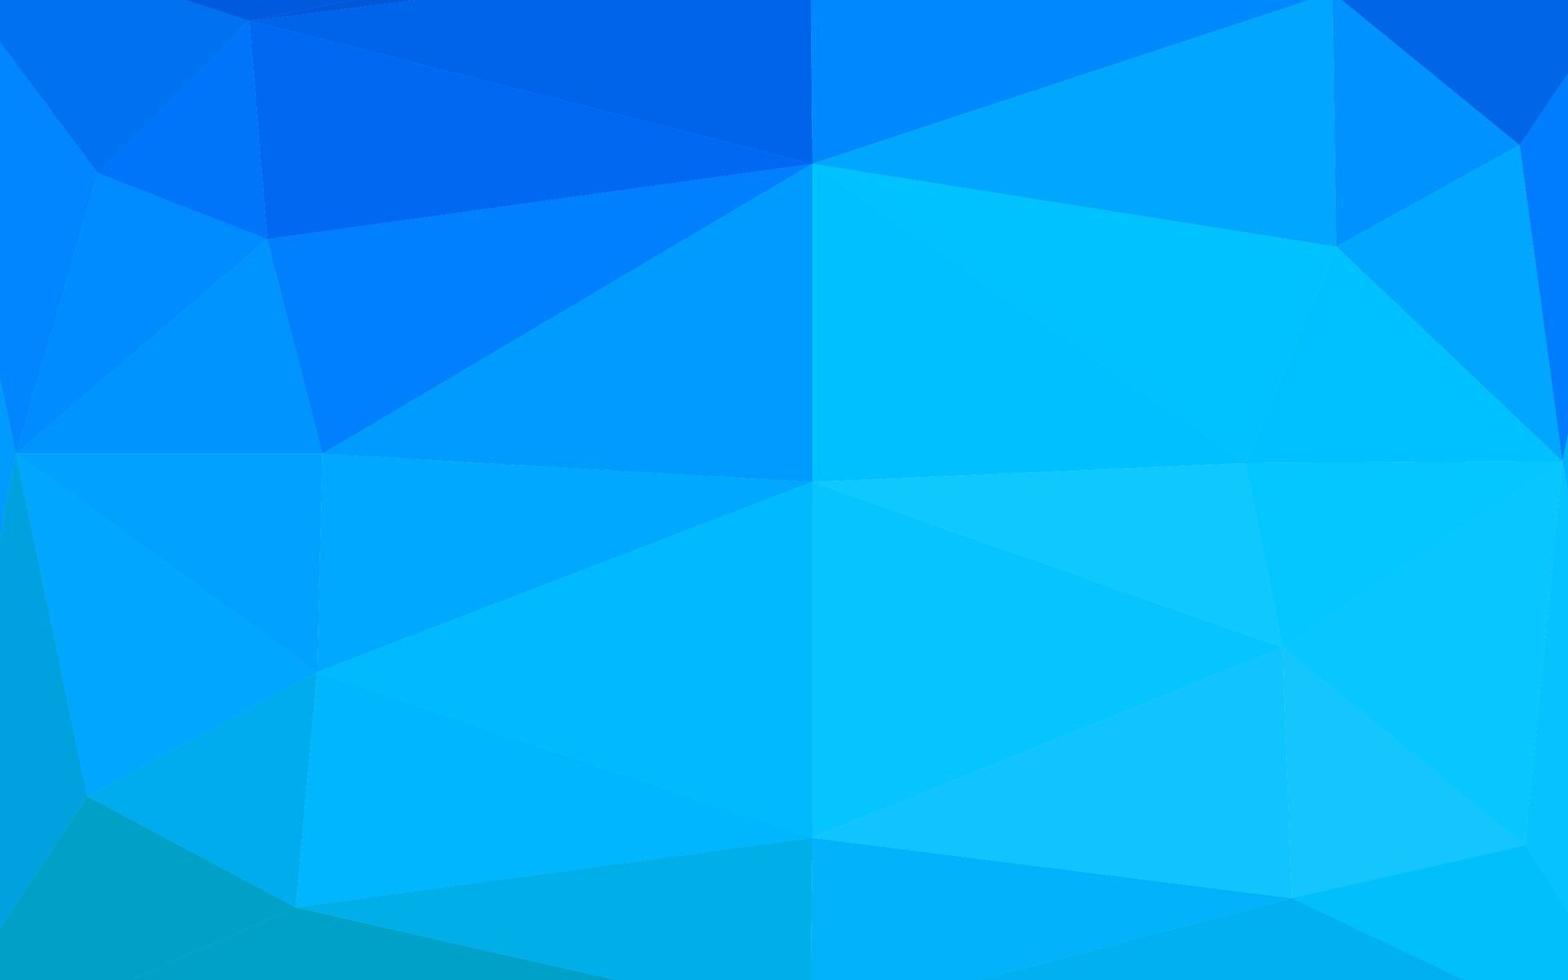 diseño abstracto de polígono de vector azul claro.